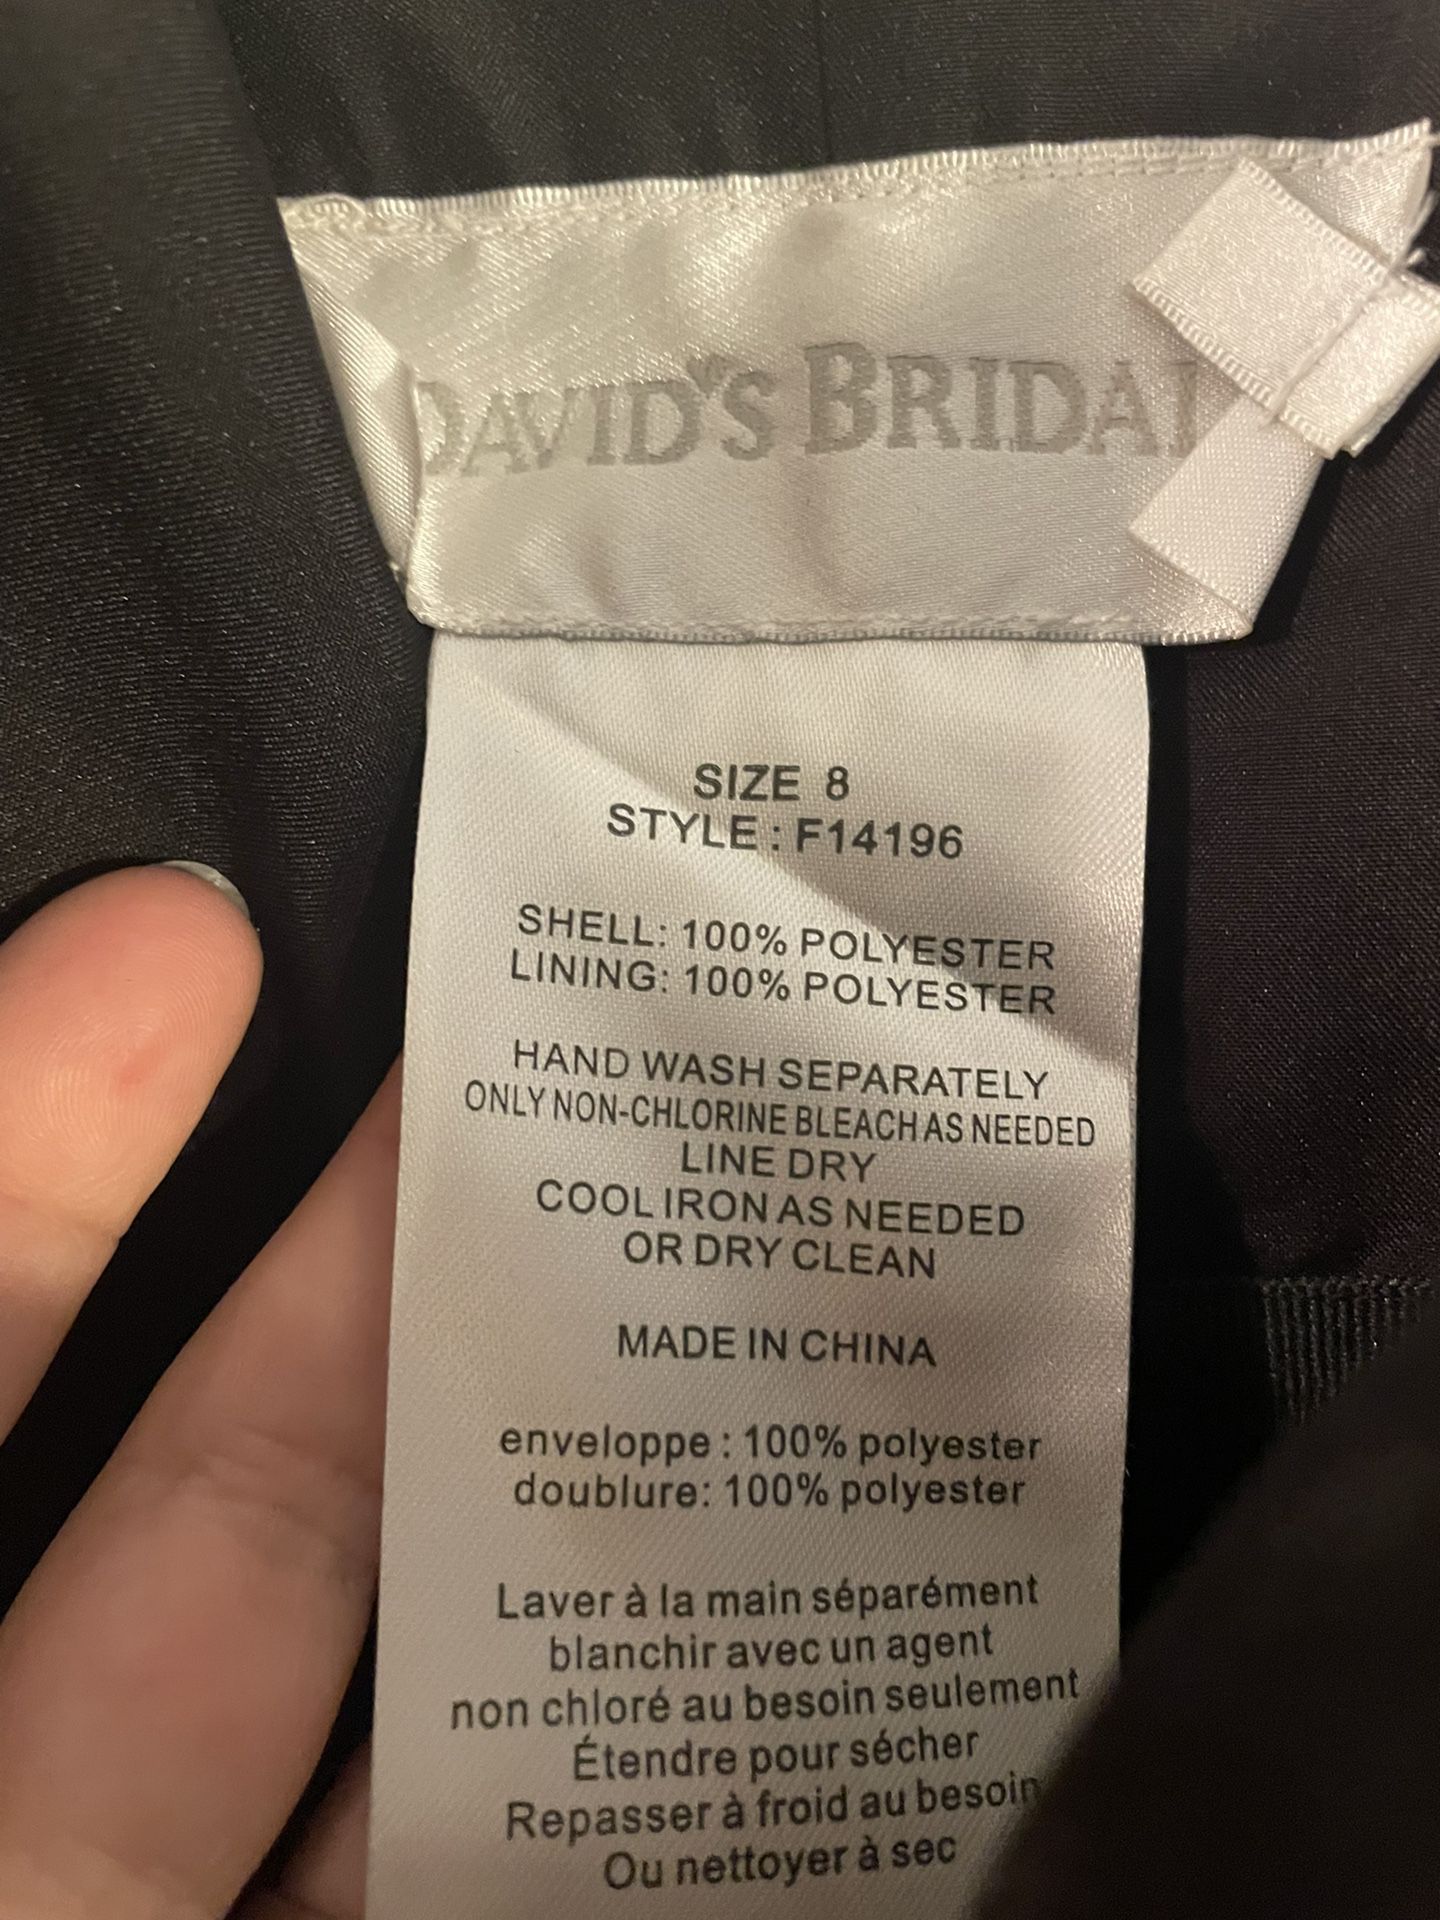 Size 8 David’s bridal Formal Dress Size 8